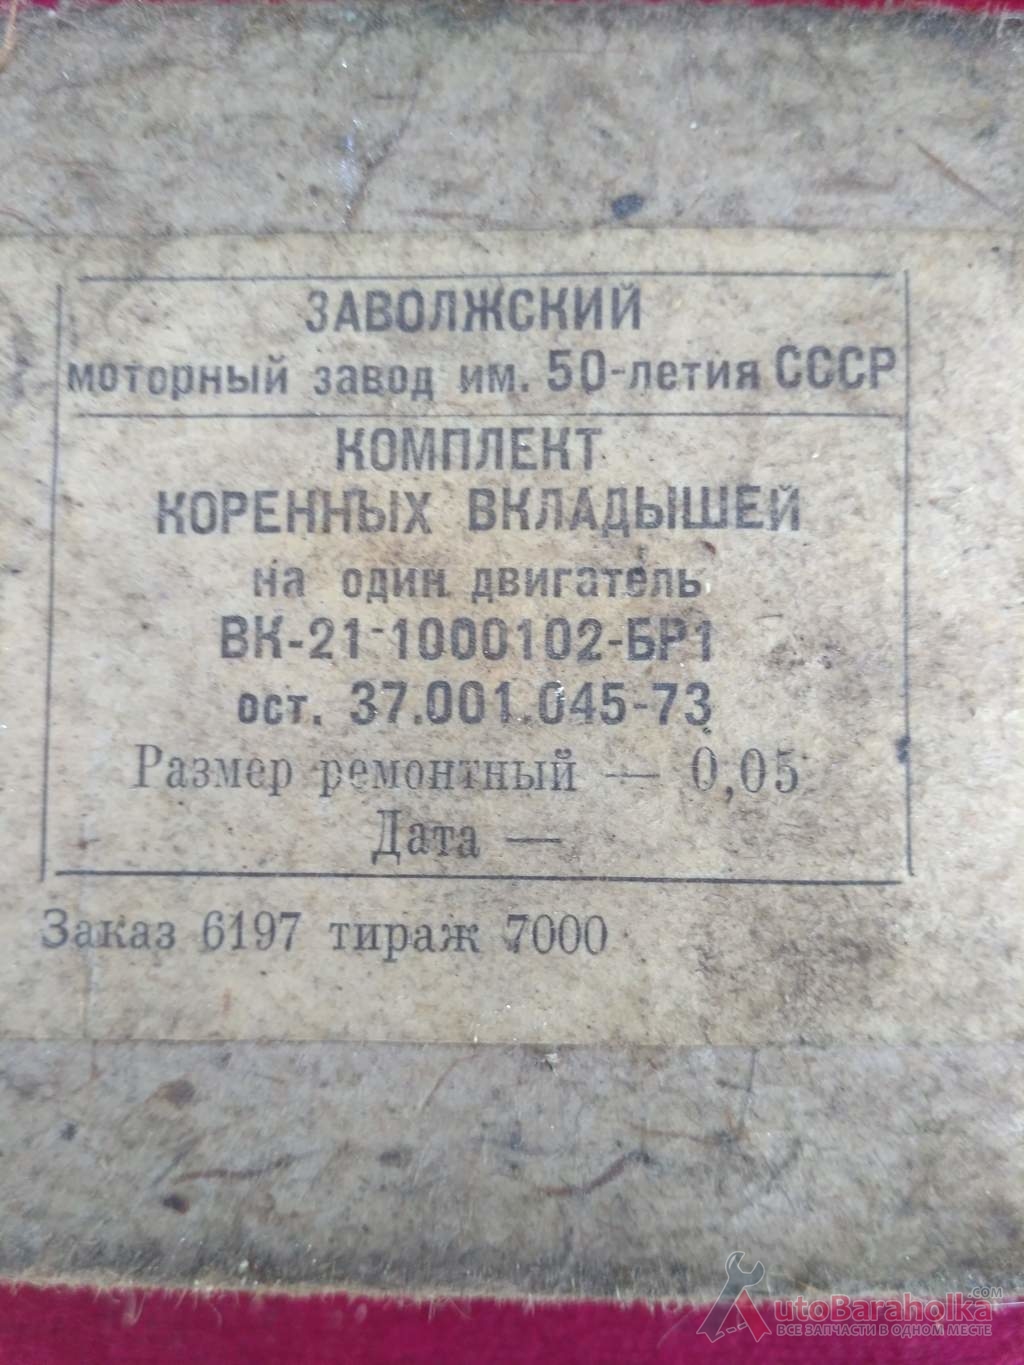 Продам Комплект коренных вкладышей ГАЗ-21, размер 0, 05 Краматорск